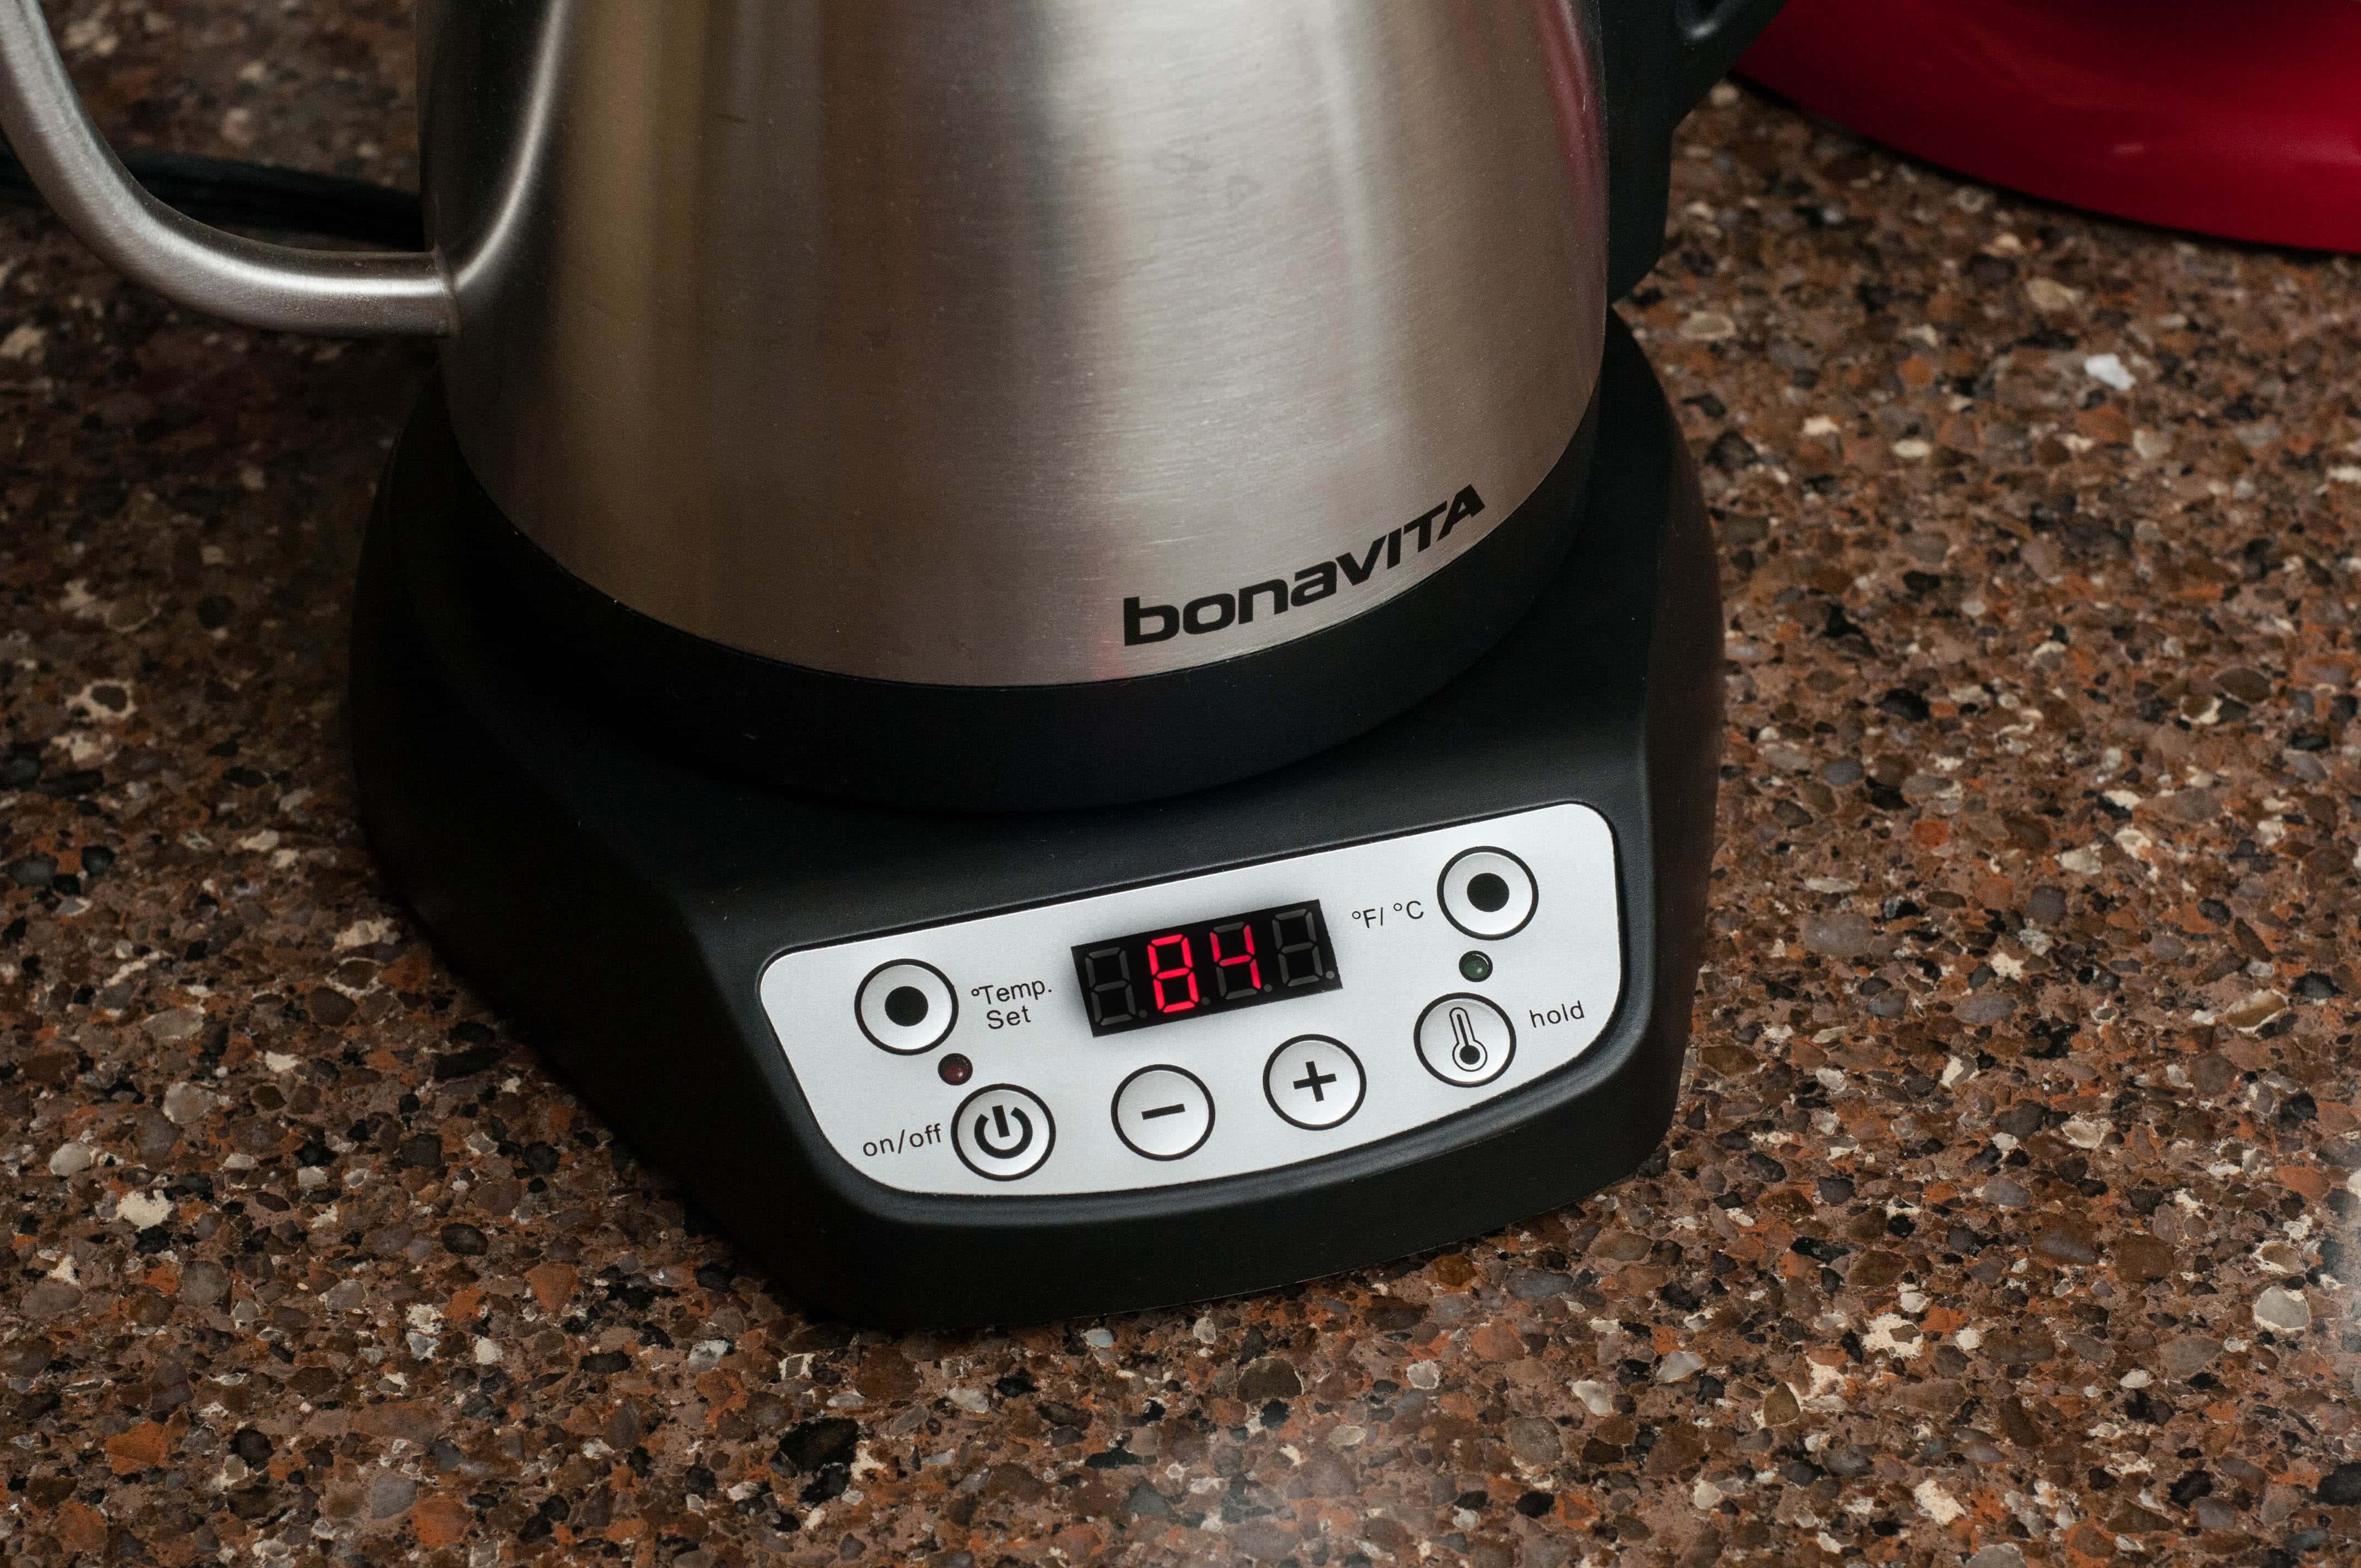 Bonavita Variable-Temperature Electric Tea Kettles